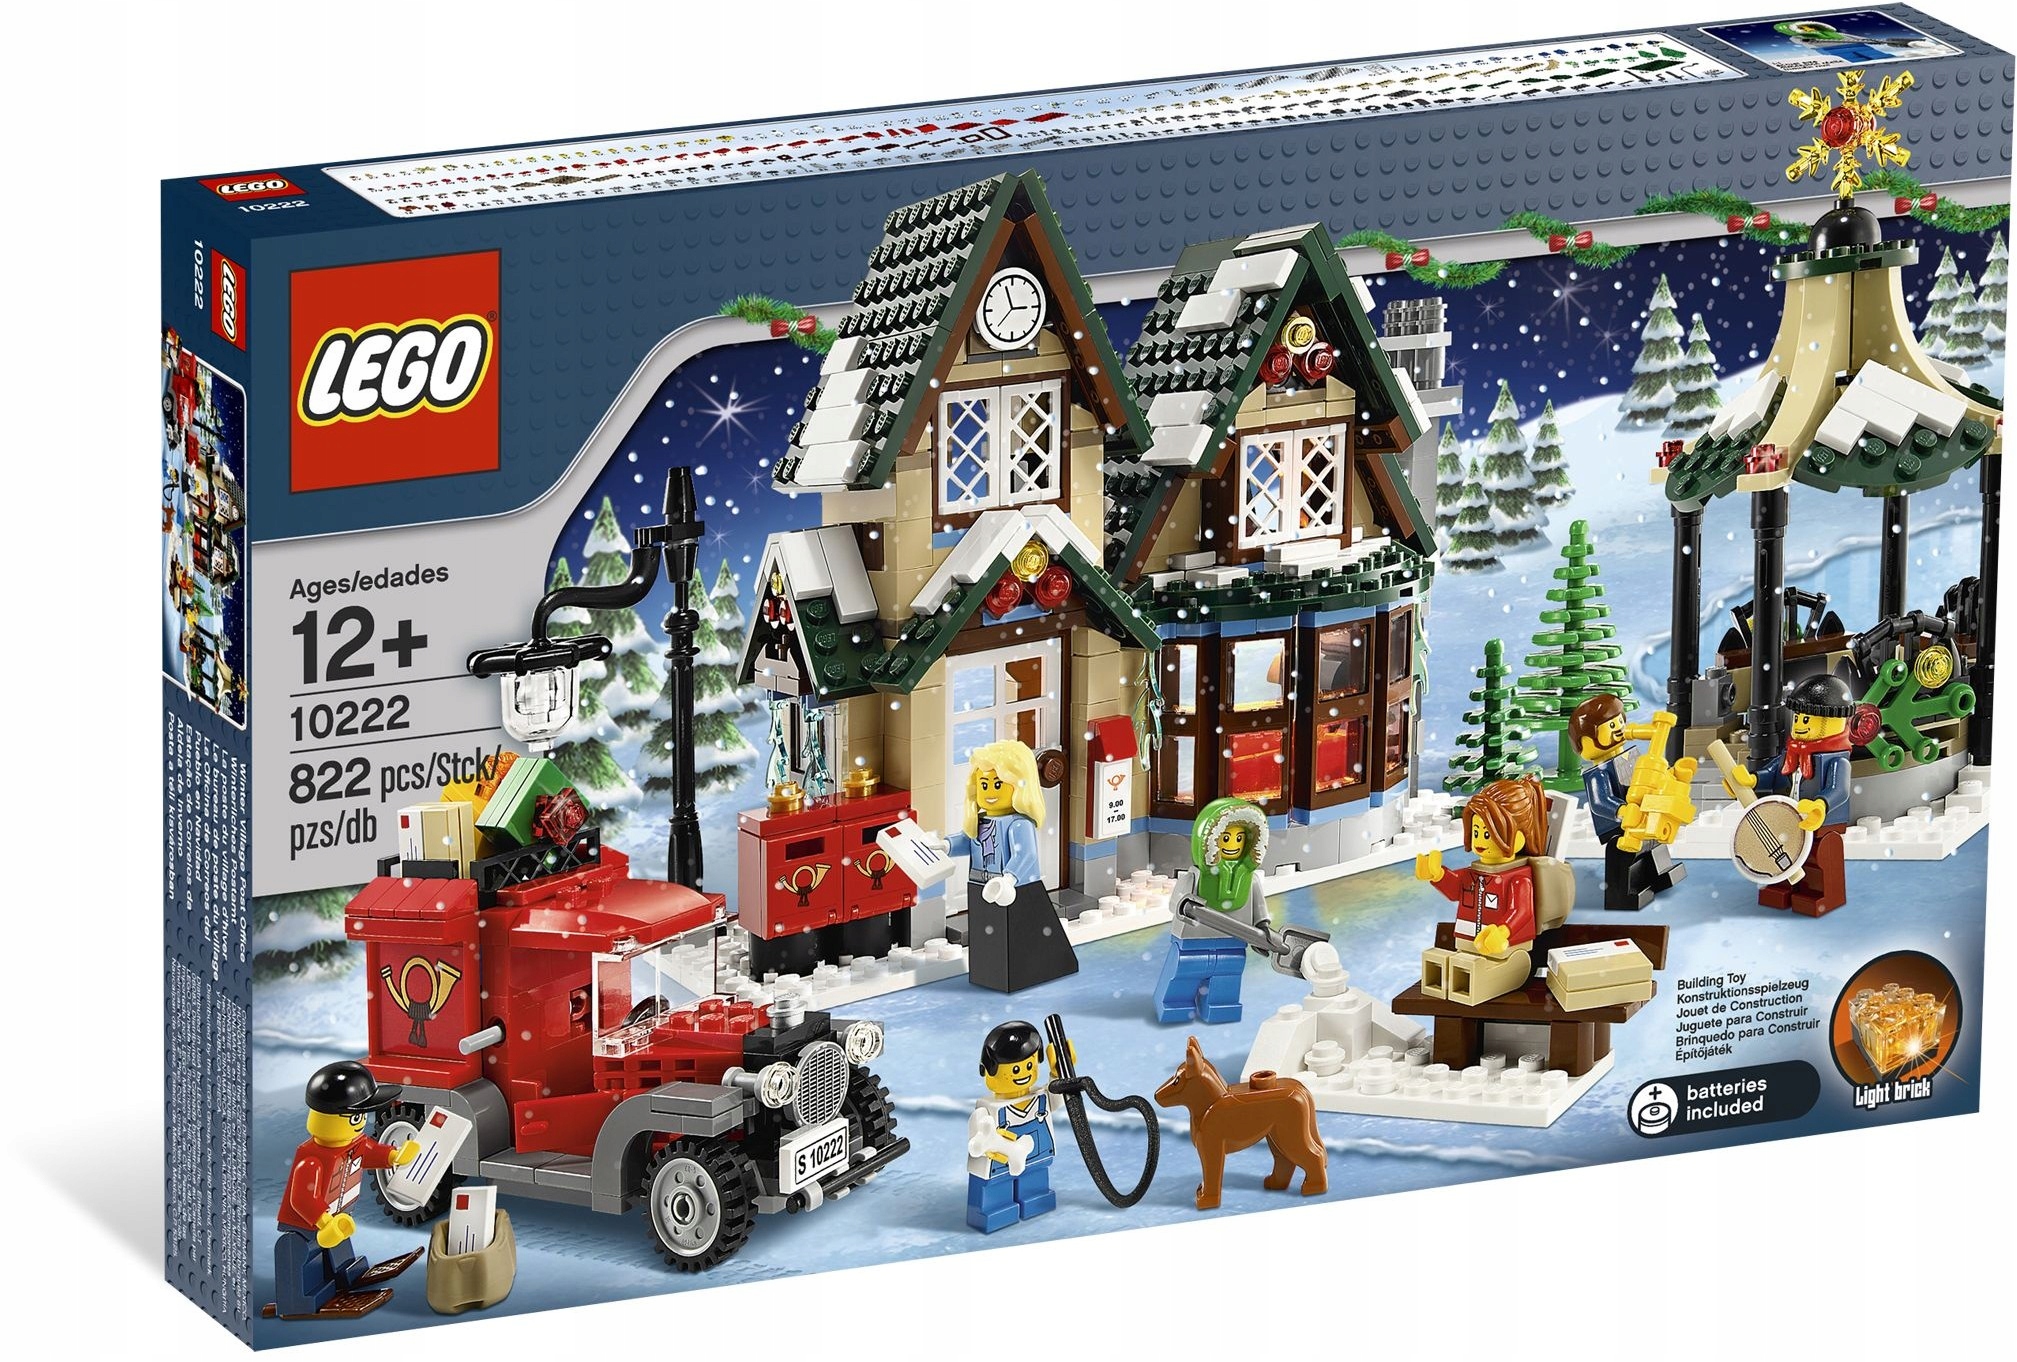 LEGO Creator Expert Winter Village Post Office Set 10222 - US